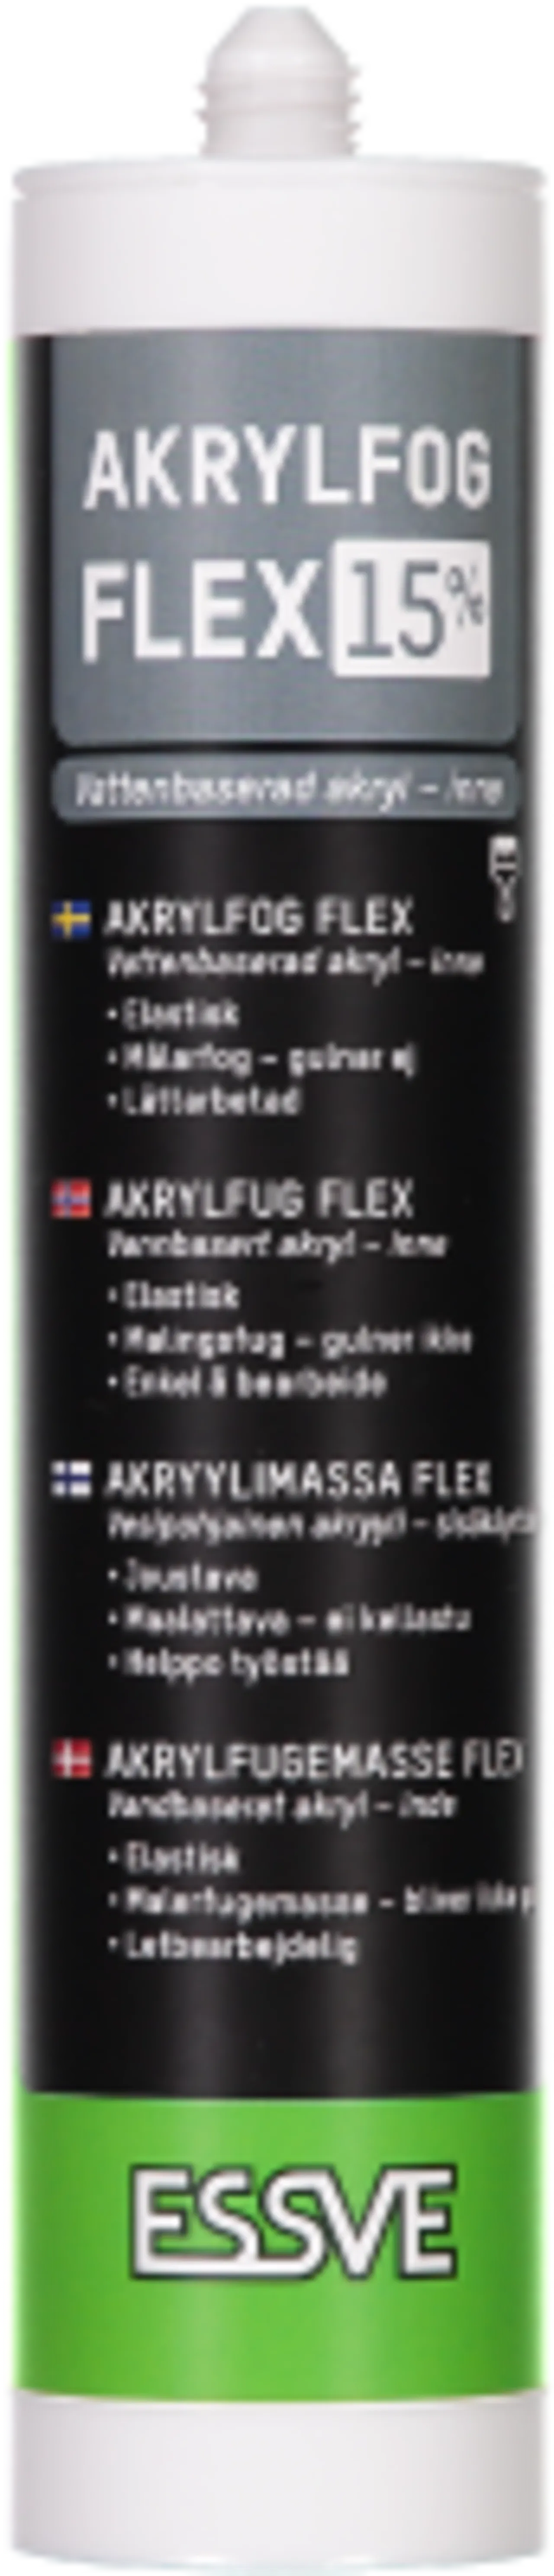 Akryl flex 15 hvit 300mlncs s 0502-y